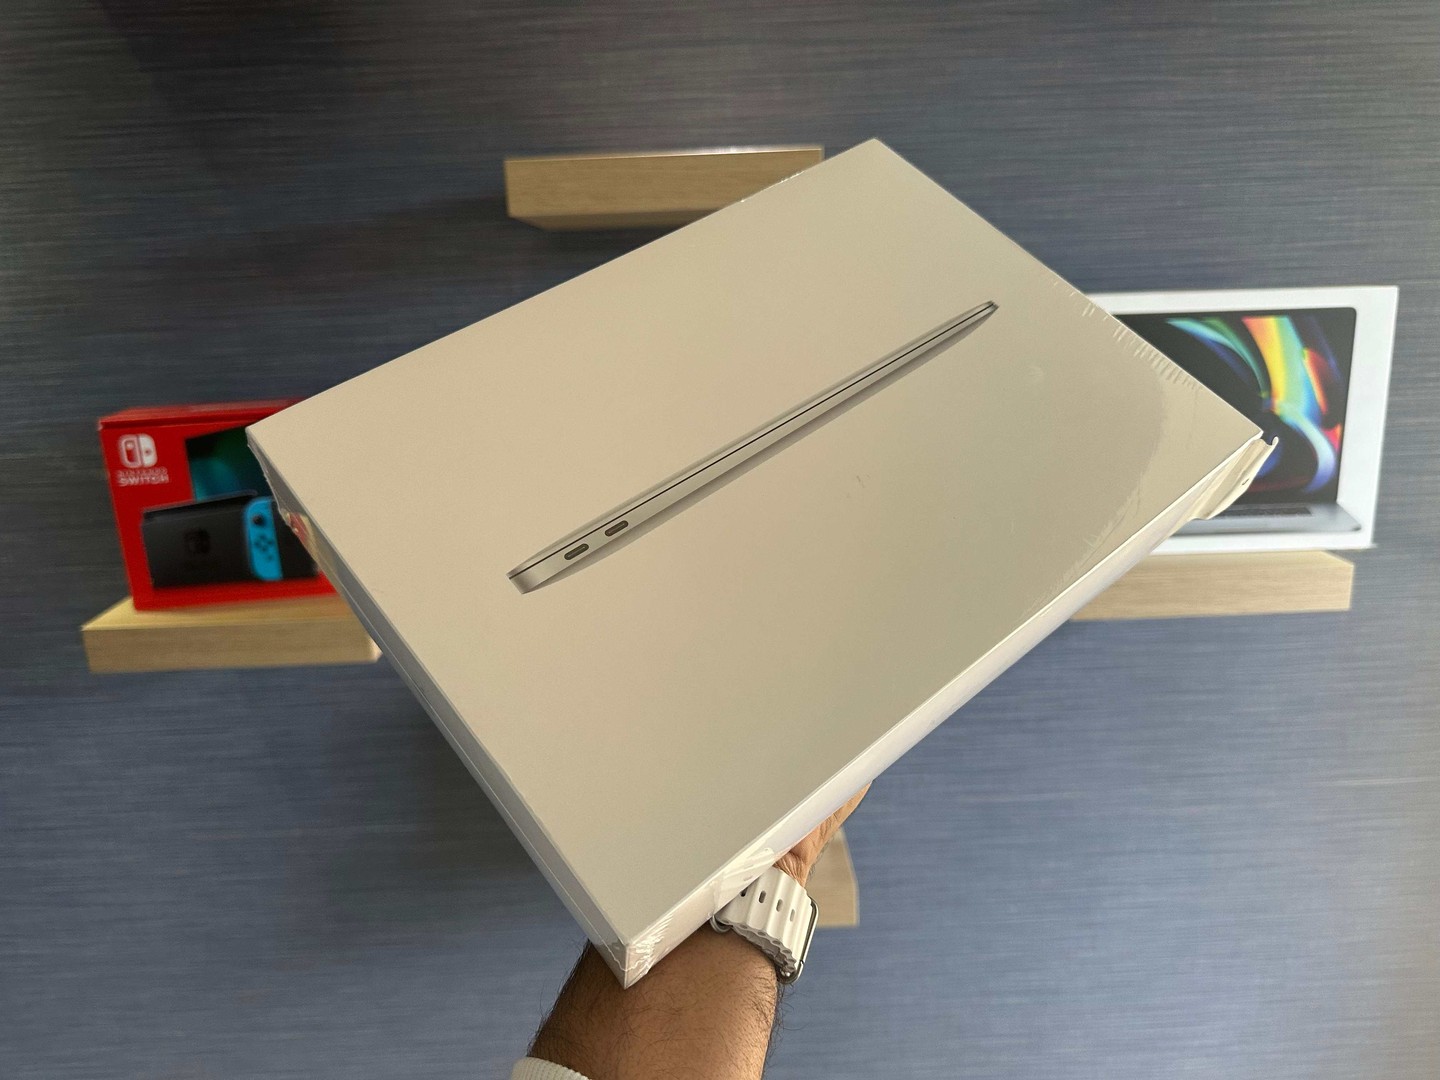 computadoras y laptops - MacBook Air 2020 13 inch/ M1 Apple Chip/ 256GB / 8GB RAM - Sellada $ 53,500 NEG 0